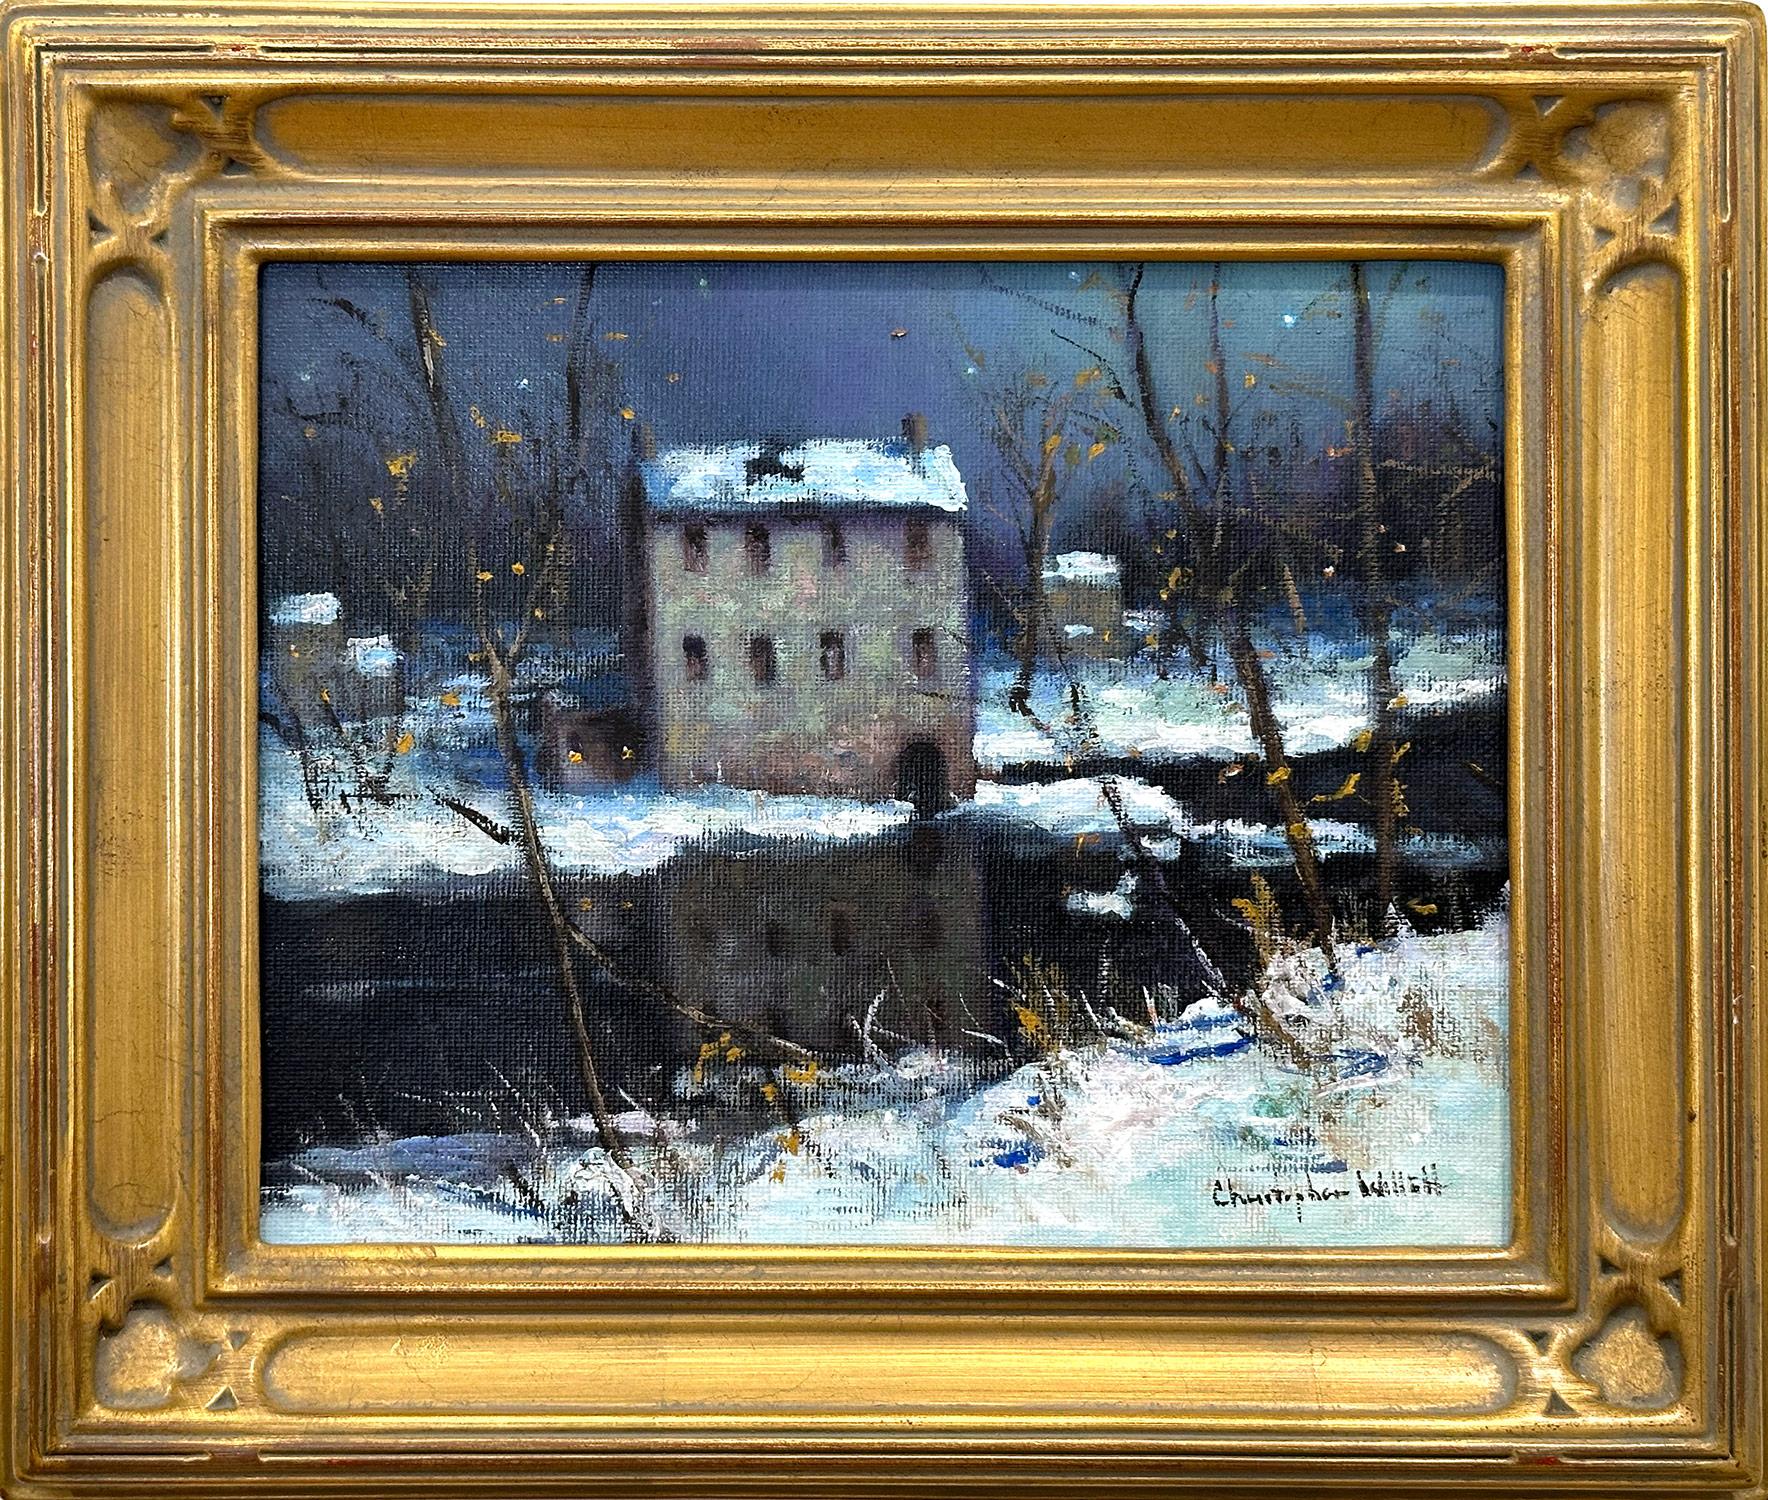 Christopher Willett Landscape Painting - "Mill Along The Creek" Bucks County Twilight Snow Scene Landscape Oil Painting